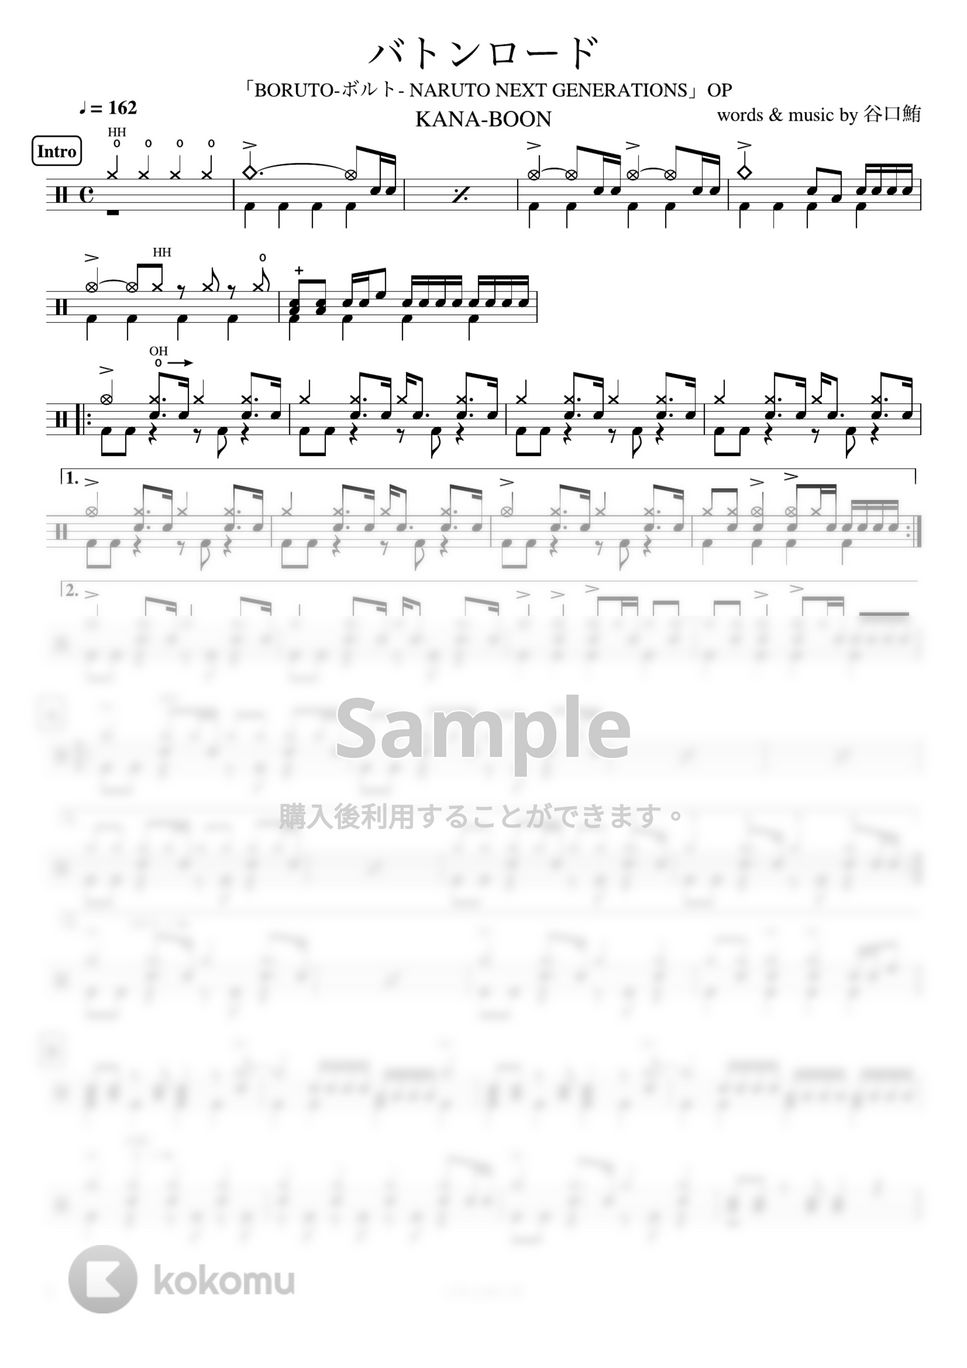 KANA-BOON - バトンロード (「BORUTO-ボルト- NARUTO NEXT GENERATIONS」OP ) by ドラムが好き！